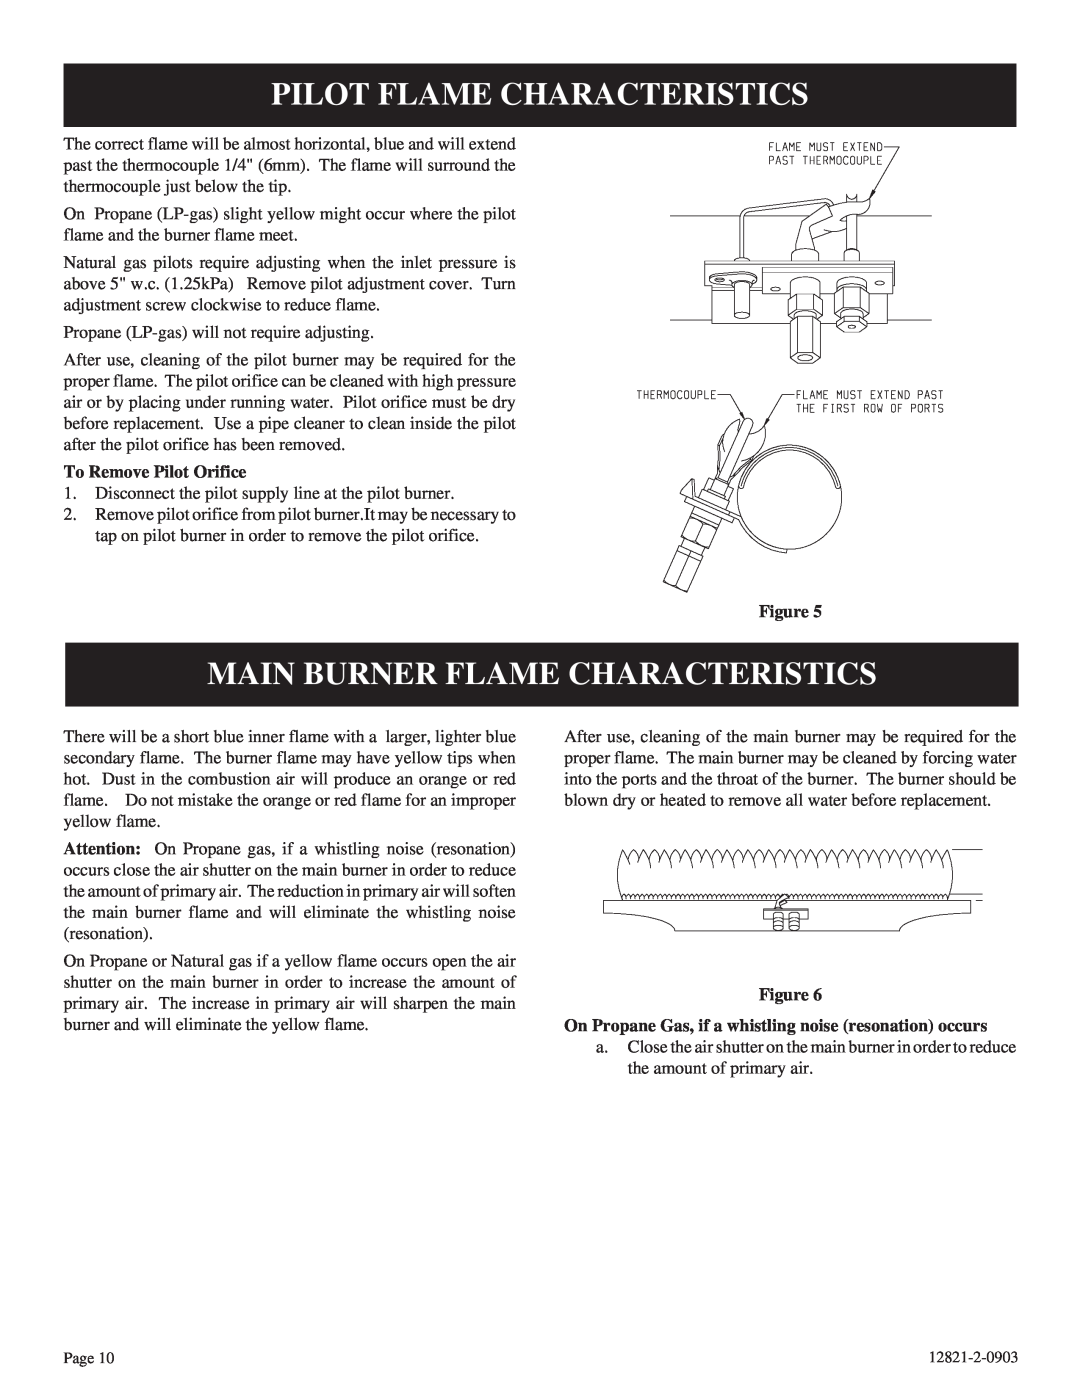 Empire Products RH-35-6, RH-25-6 Pilot Flame Characteristics, Main Burner Flame Characteristics, To Remove Pilot Orifice 